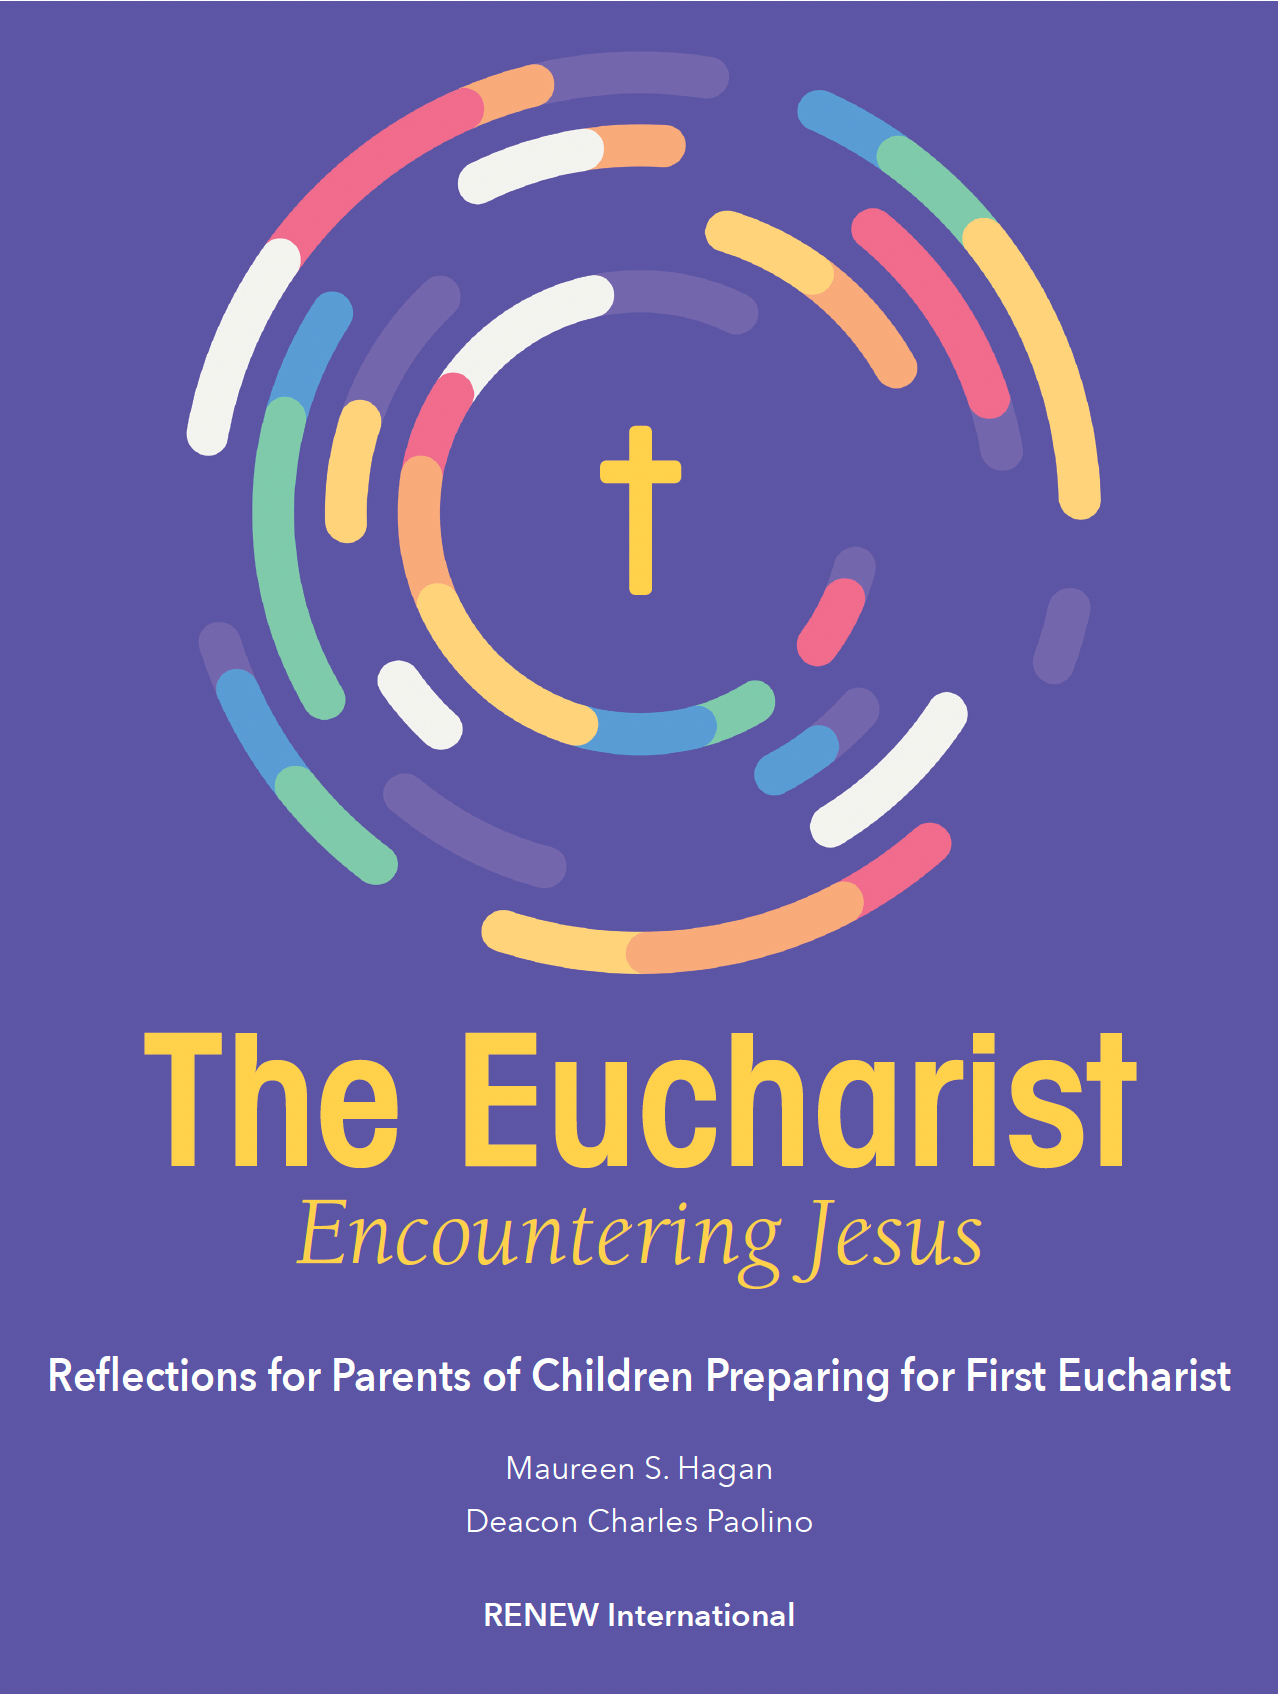 The Eucharist: Encountering Jesus